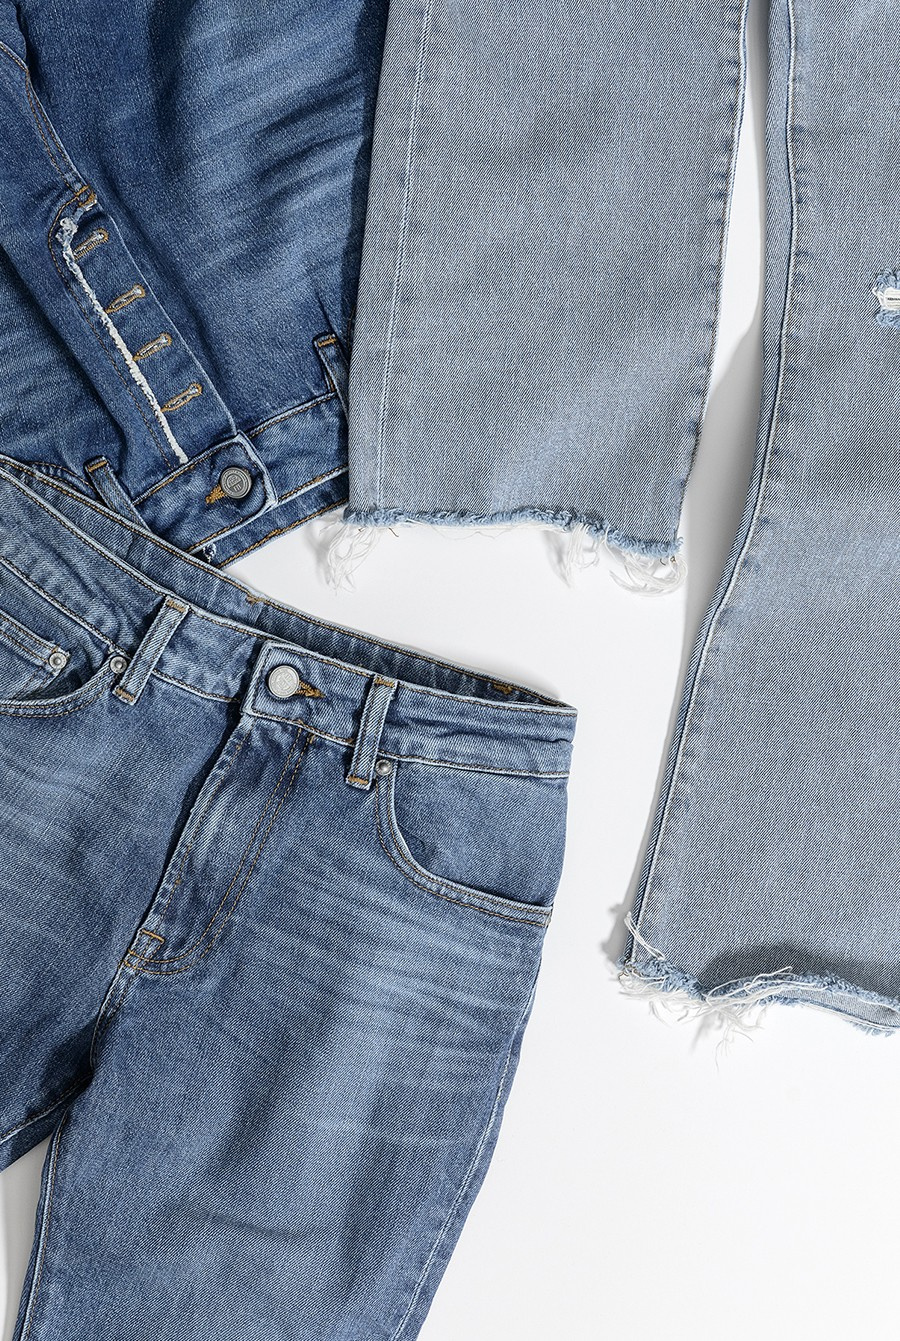 Share 122+ global denim jeans market latest